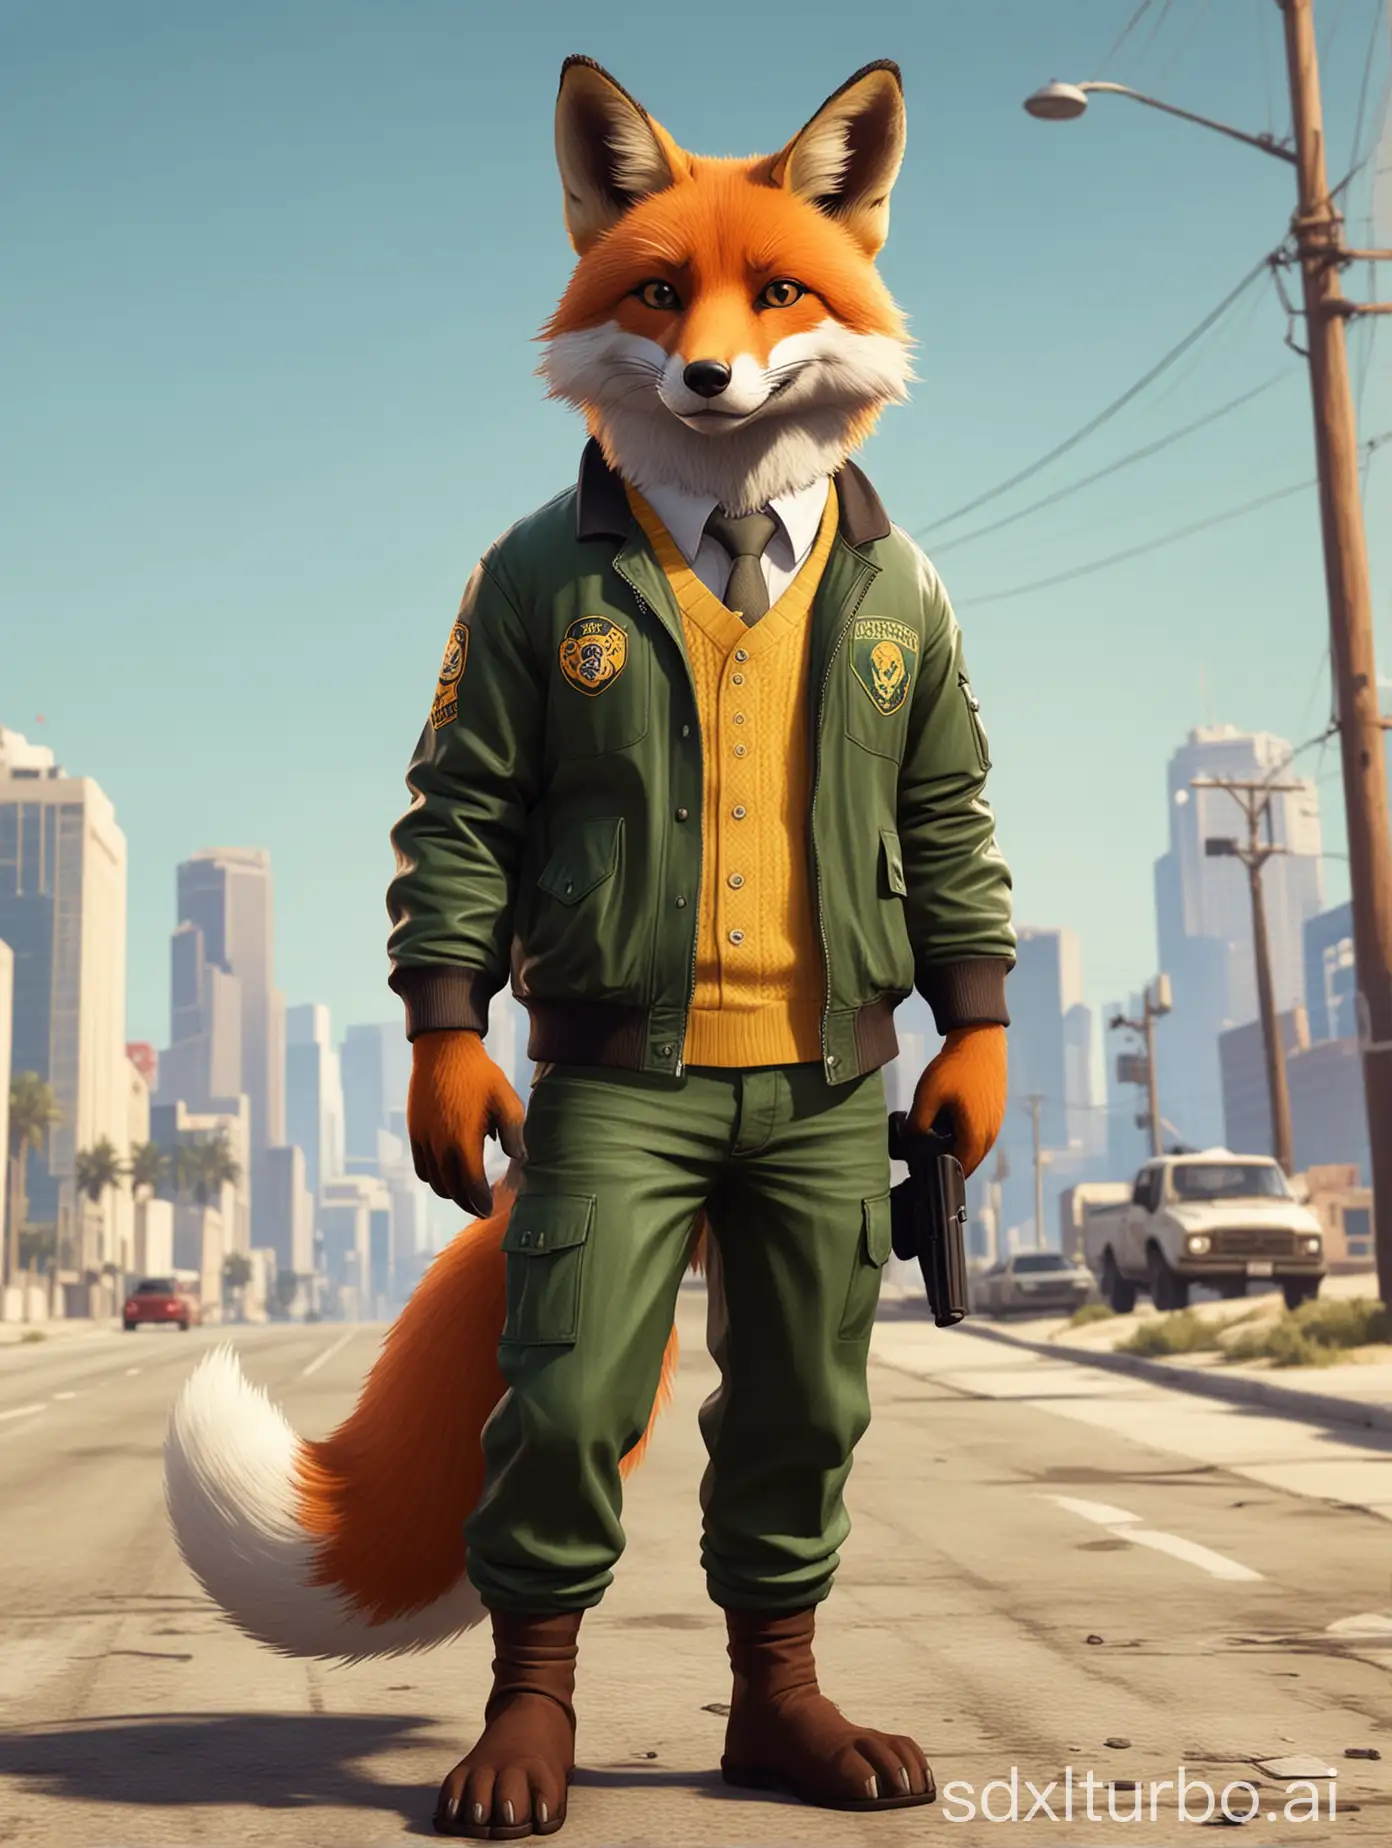 Urban-Fox-Character-Inspired-by-GTA-5